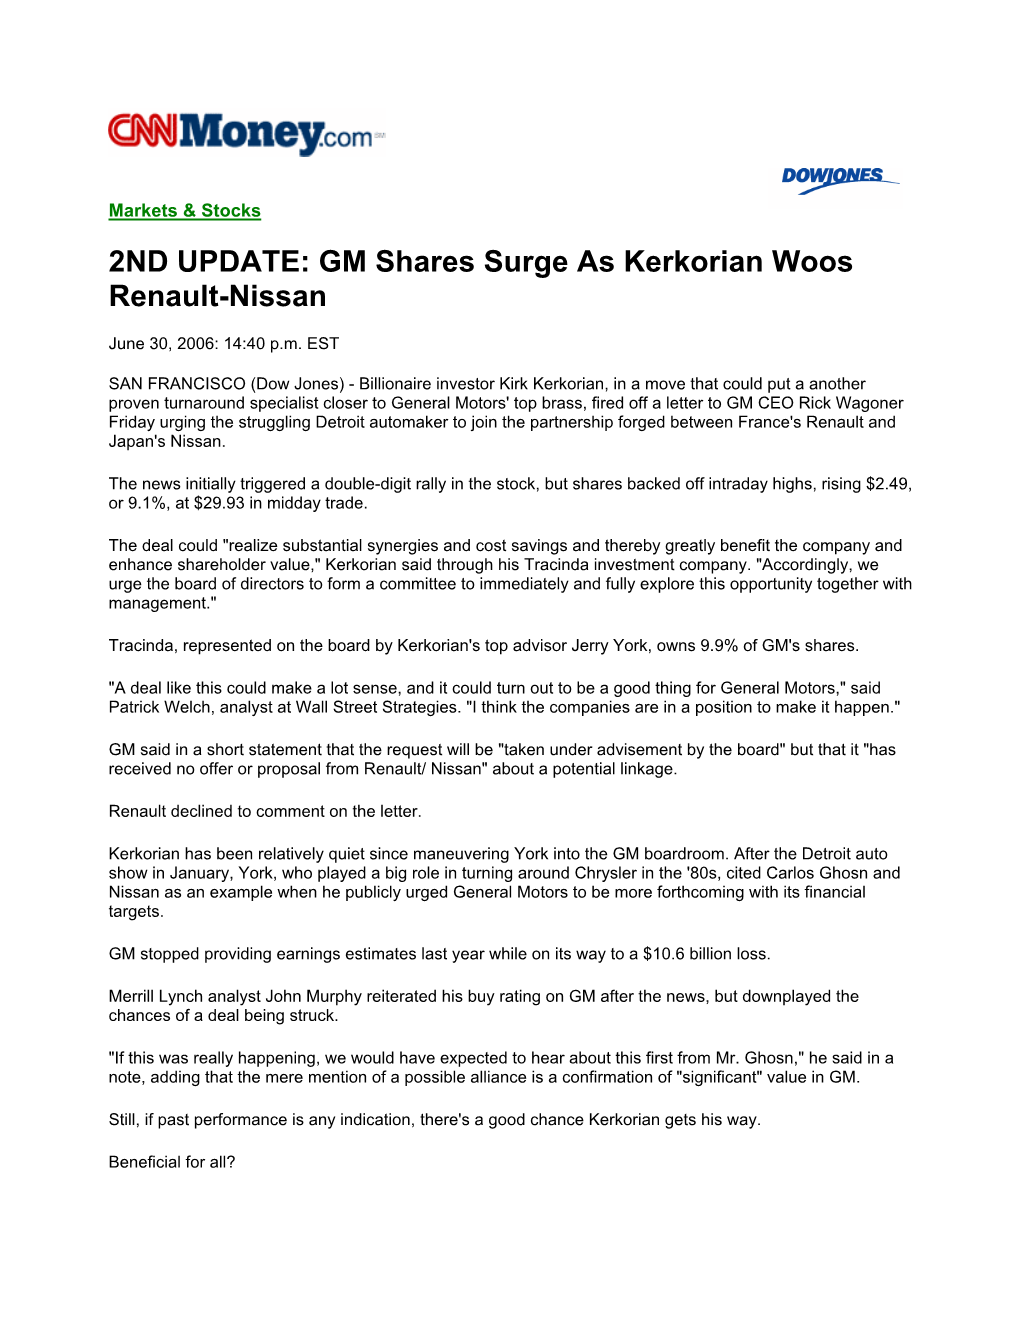 GM Shares Surge As Kerkorian Woos Renault-Nissan